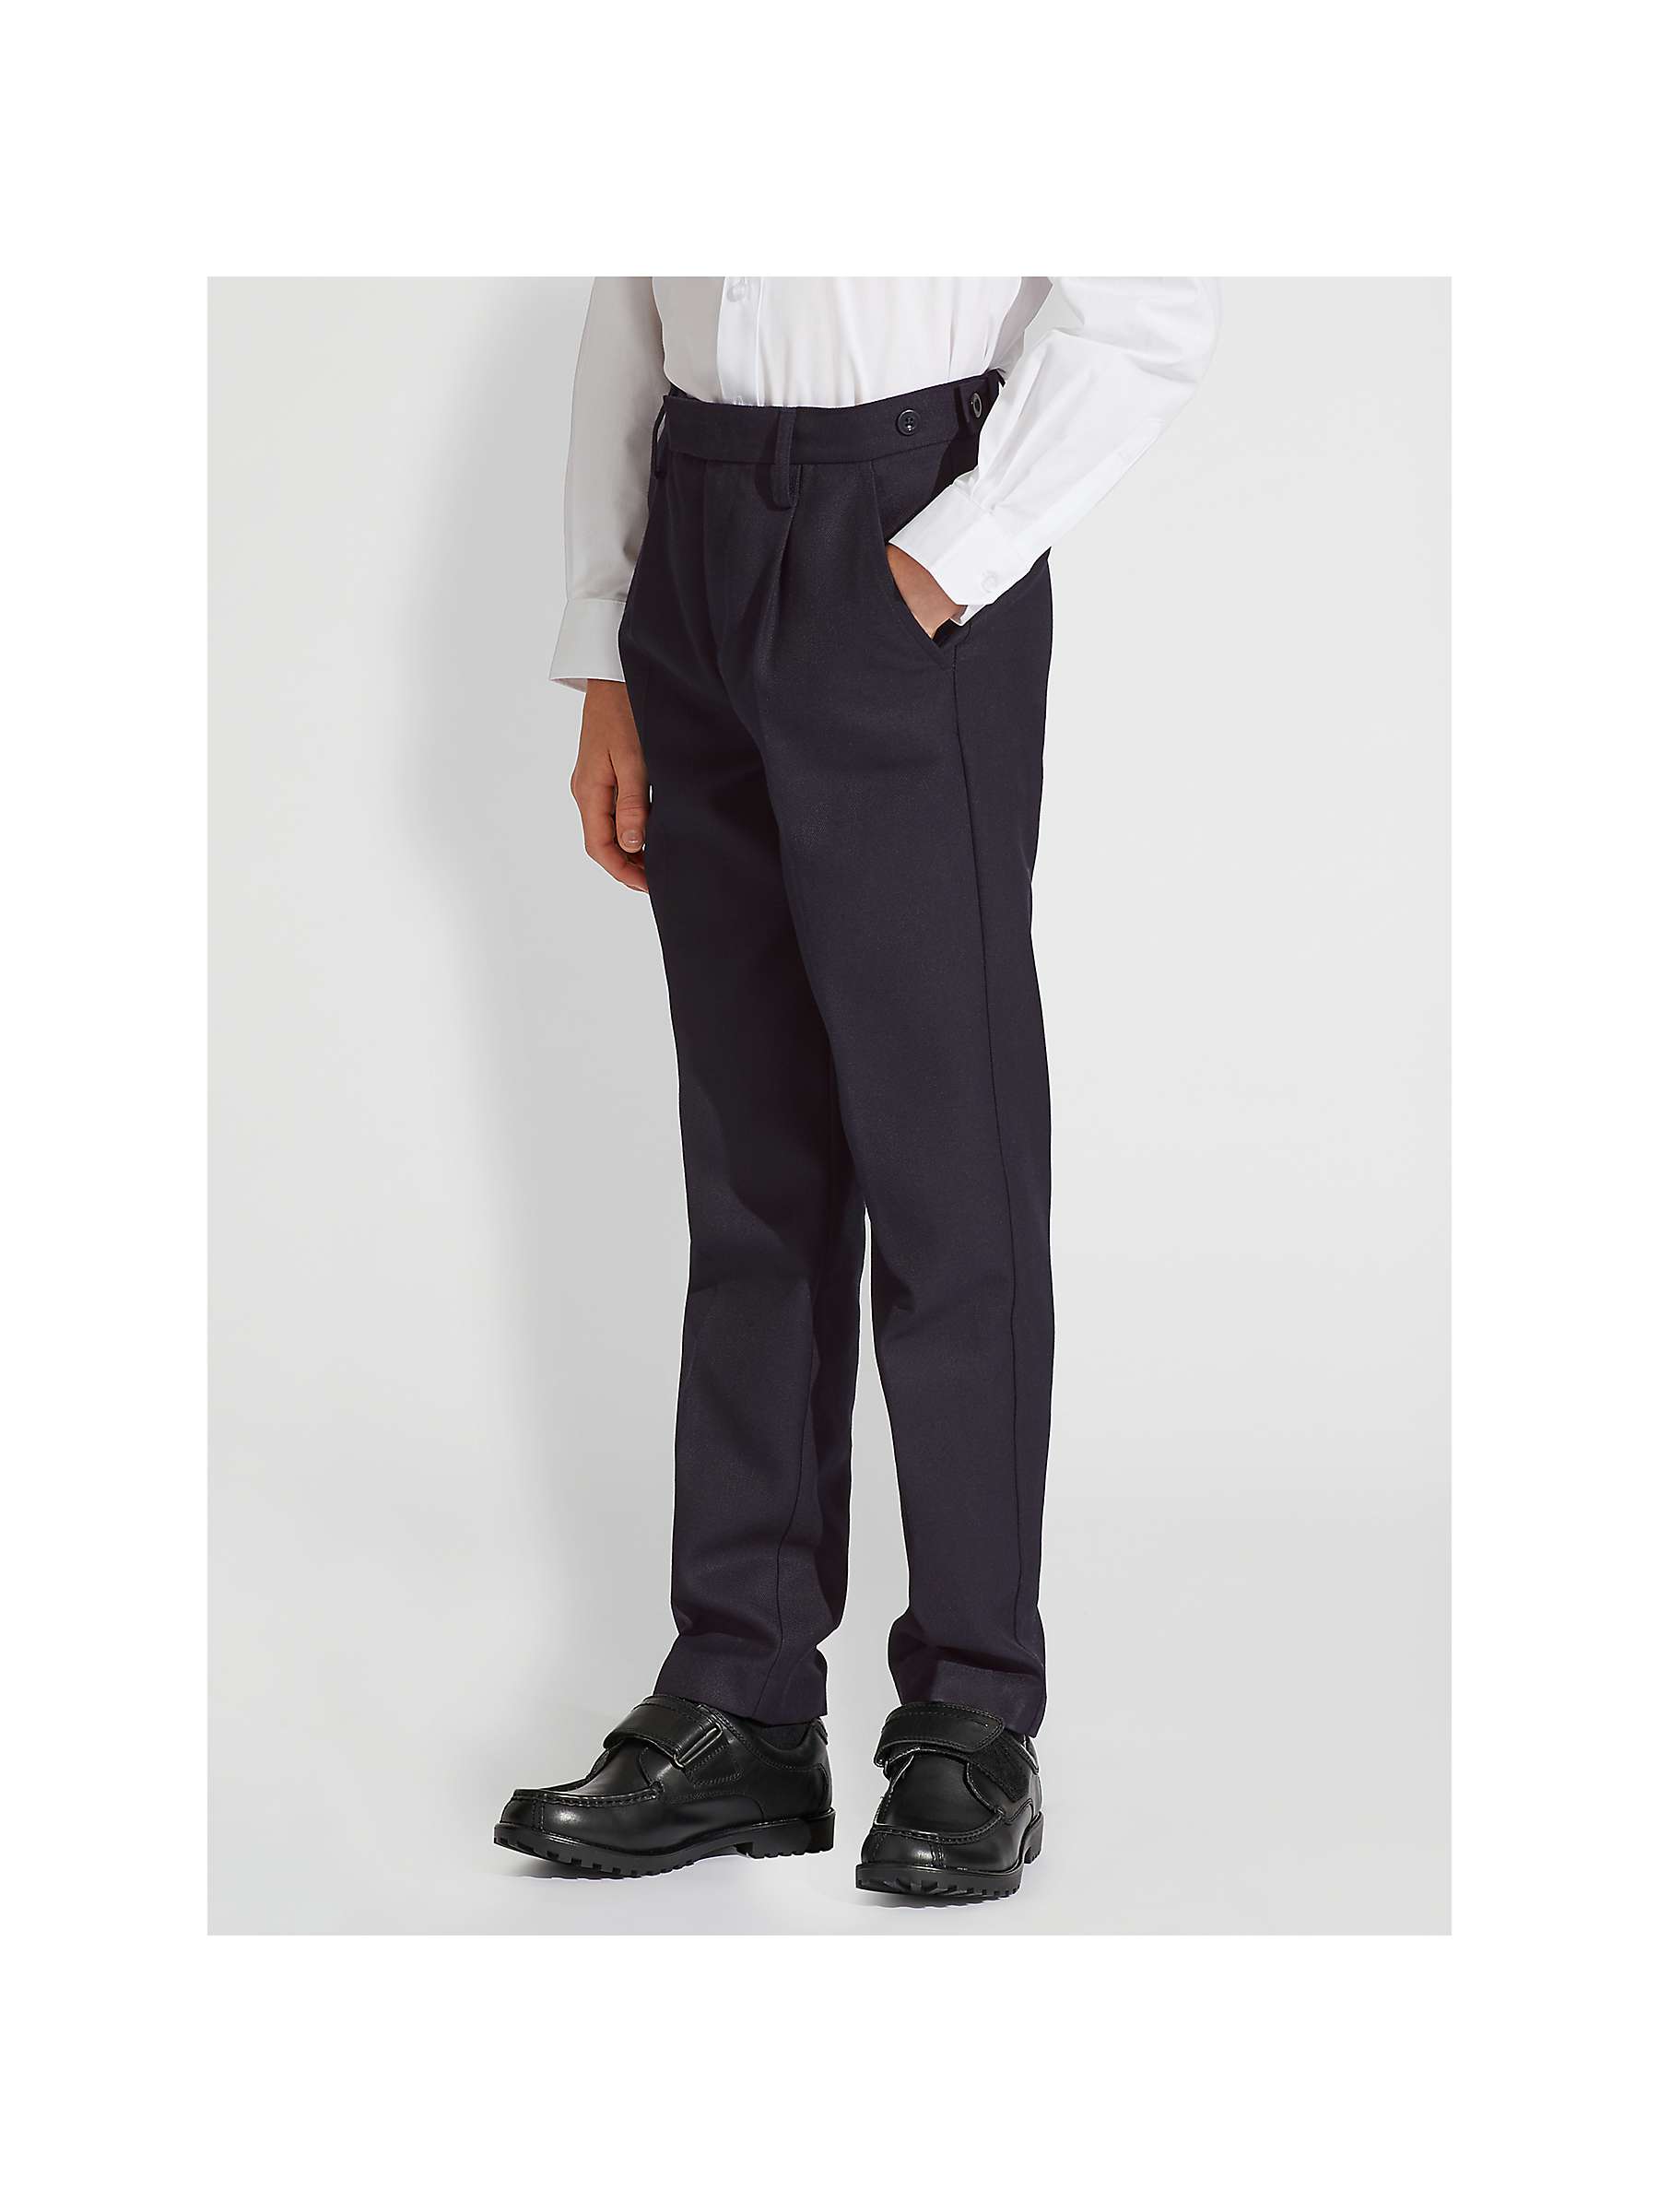 Buy John Lewis Boys' Adjustable Waist Stain Resistant Tailored School Trousers Online at johnlewis.com